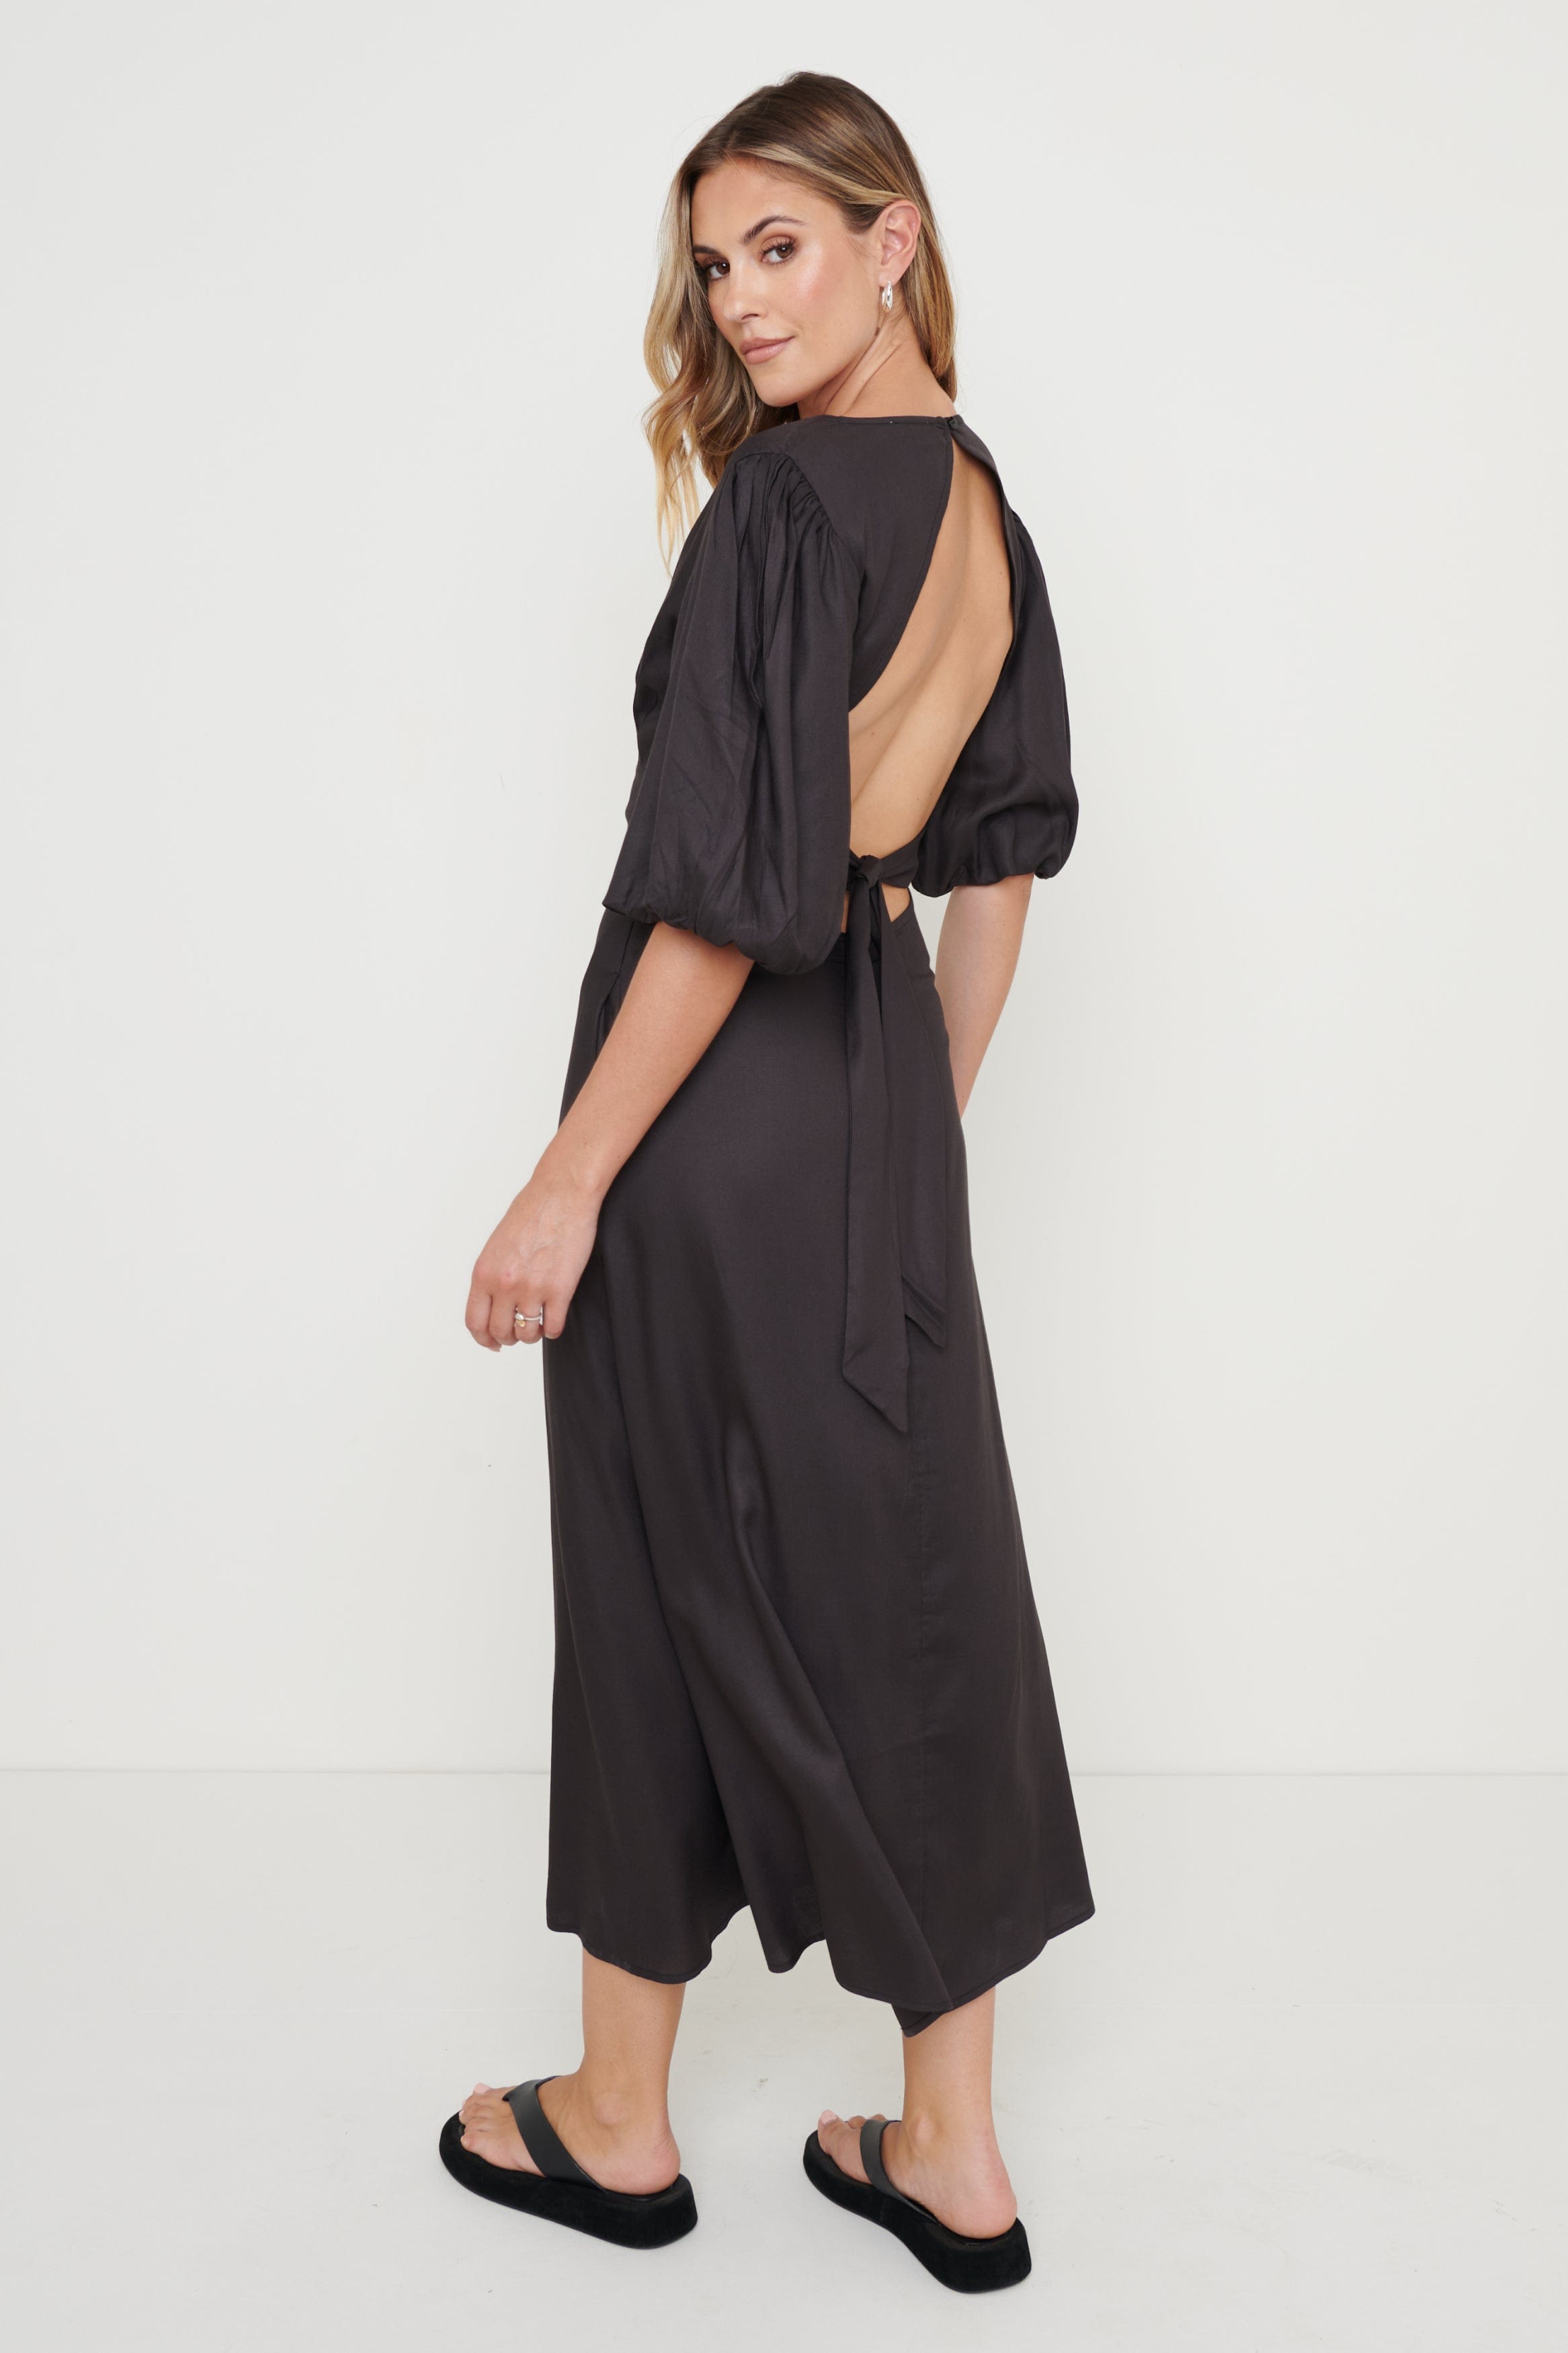 Jeanelle Puff Sleeve Backless Dress - Black, 6